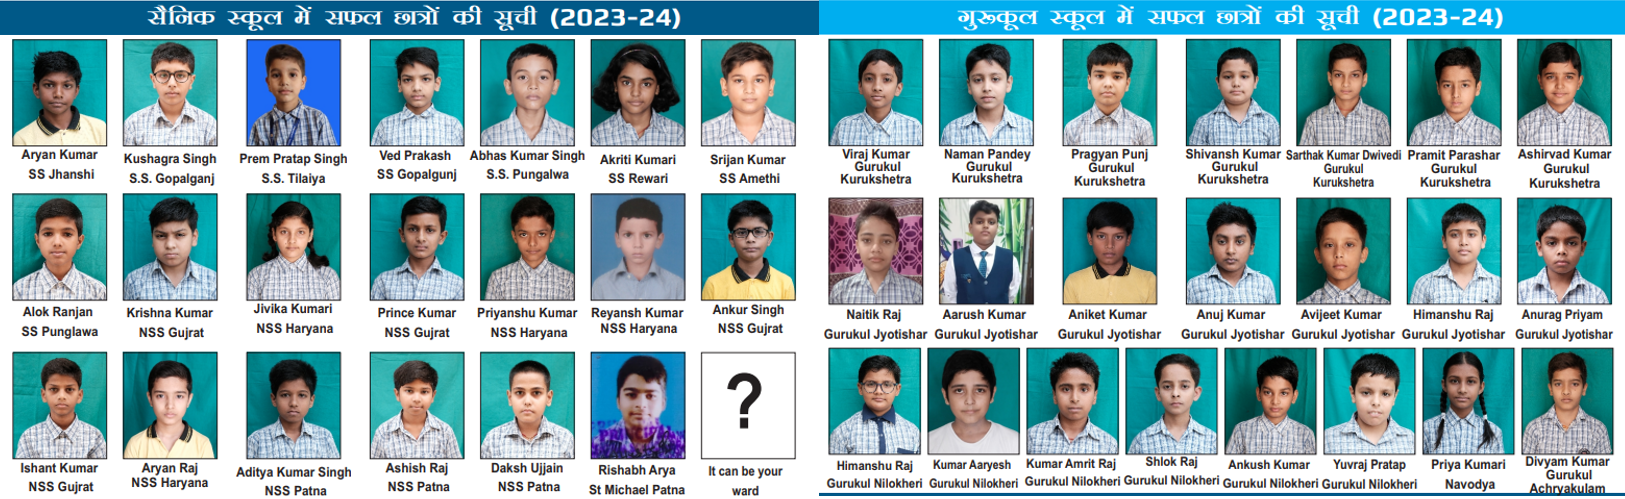 List of qualified students of all India sainik schools 2023-24